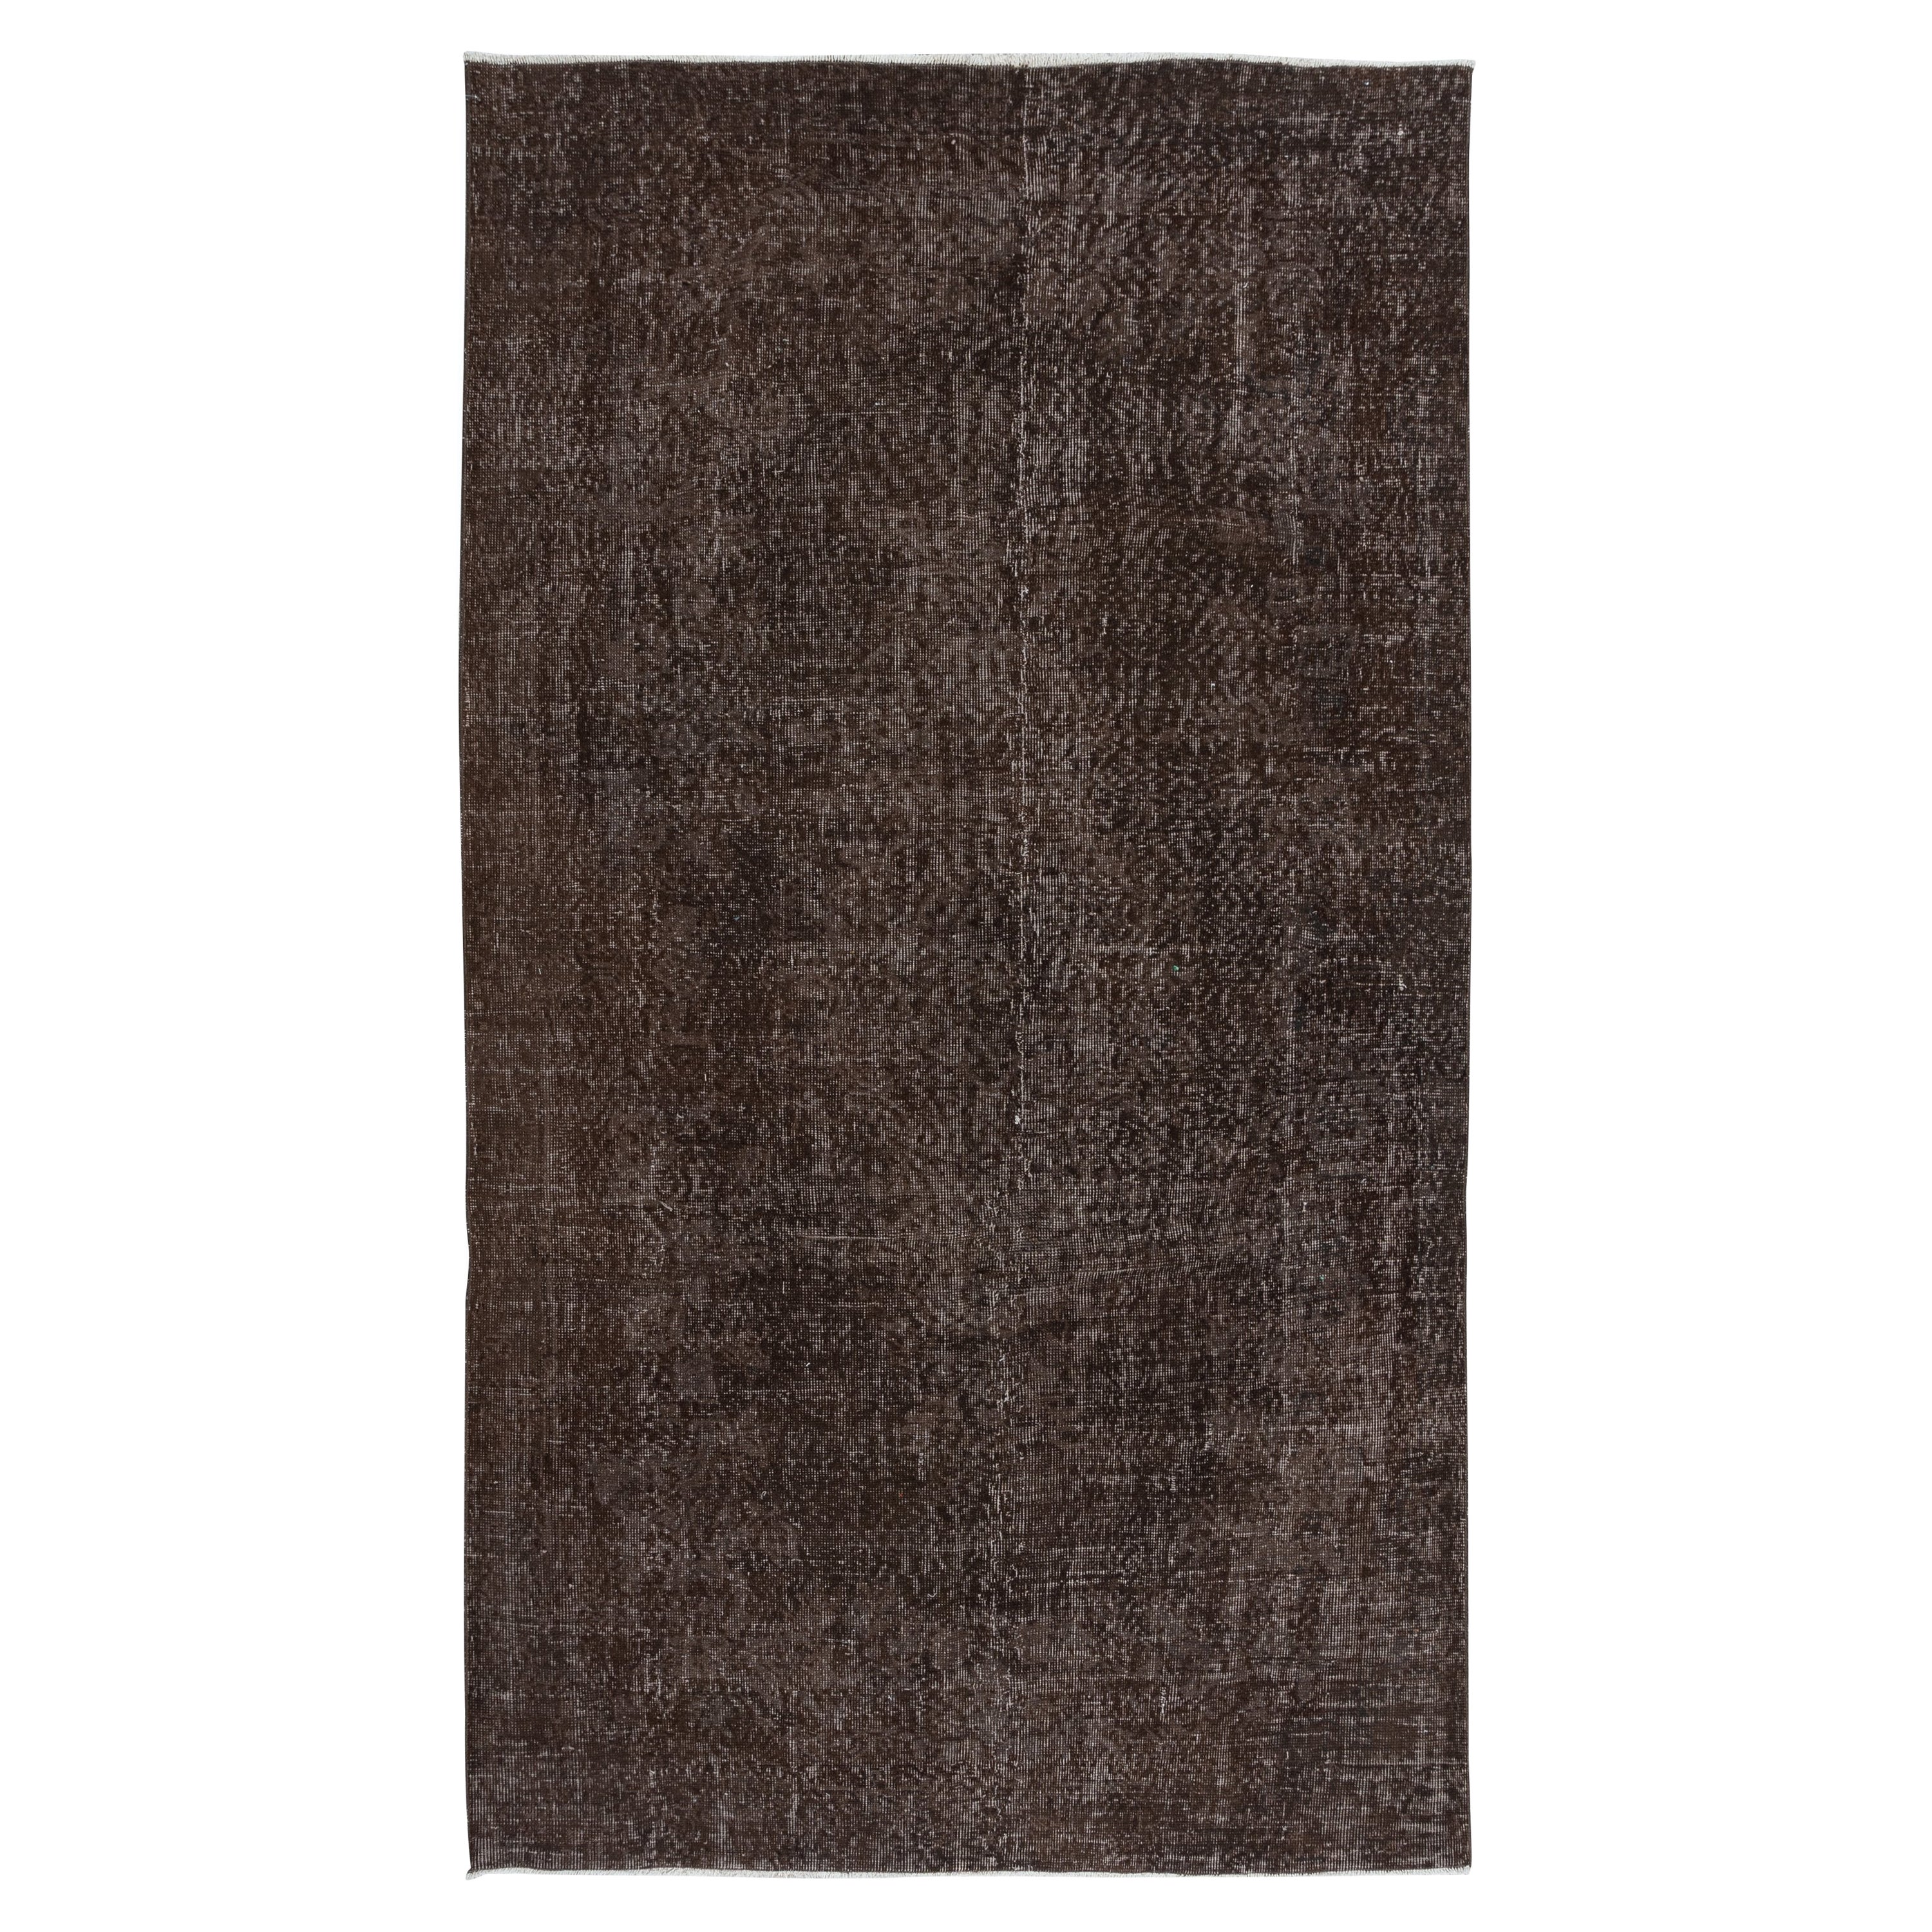 5.2x9.2 Ft Brown Handmade Turkish Area Rug, Bohem Eclectic Room Size Carpet